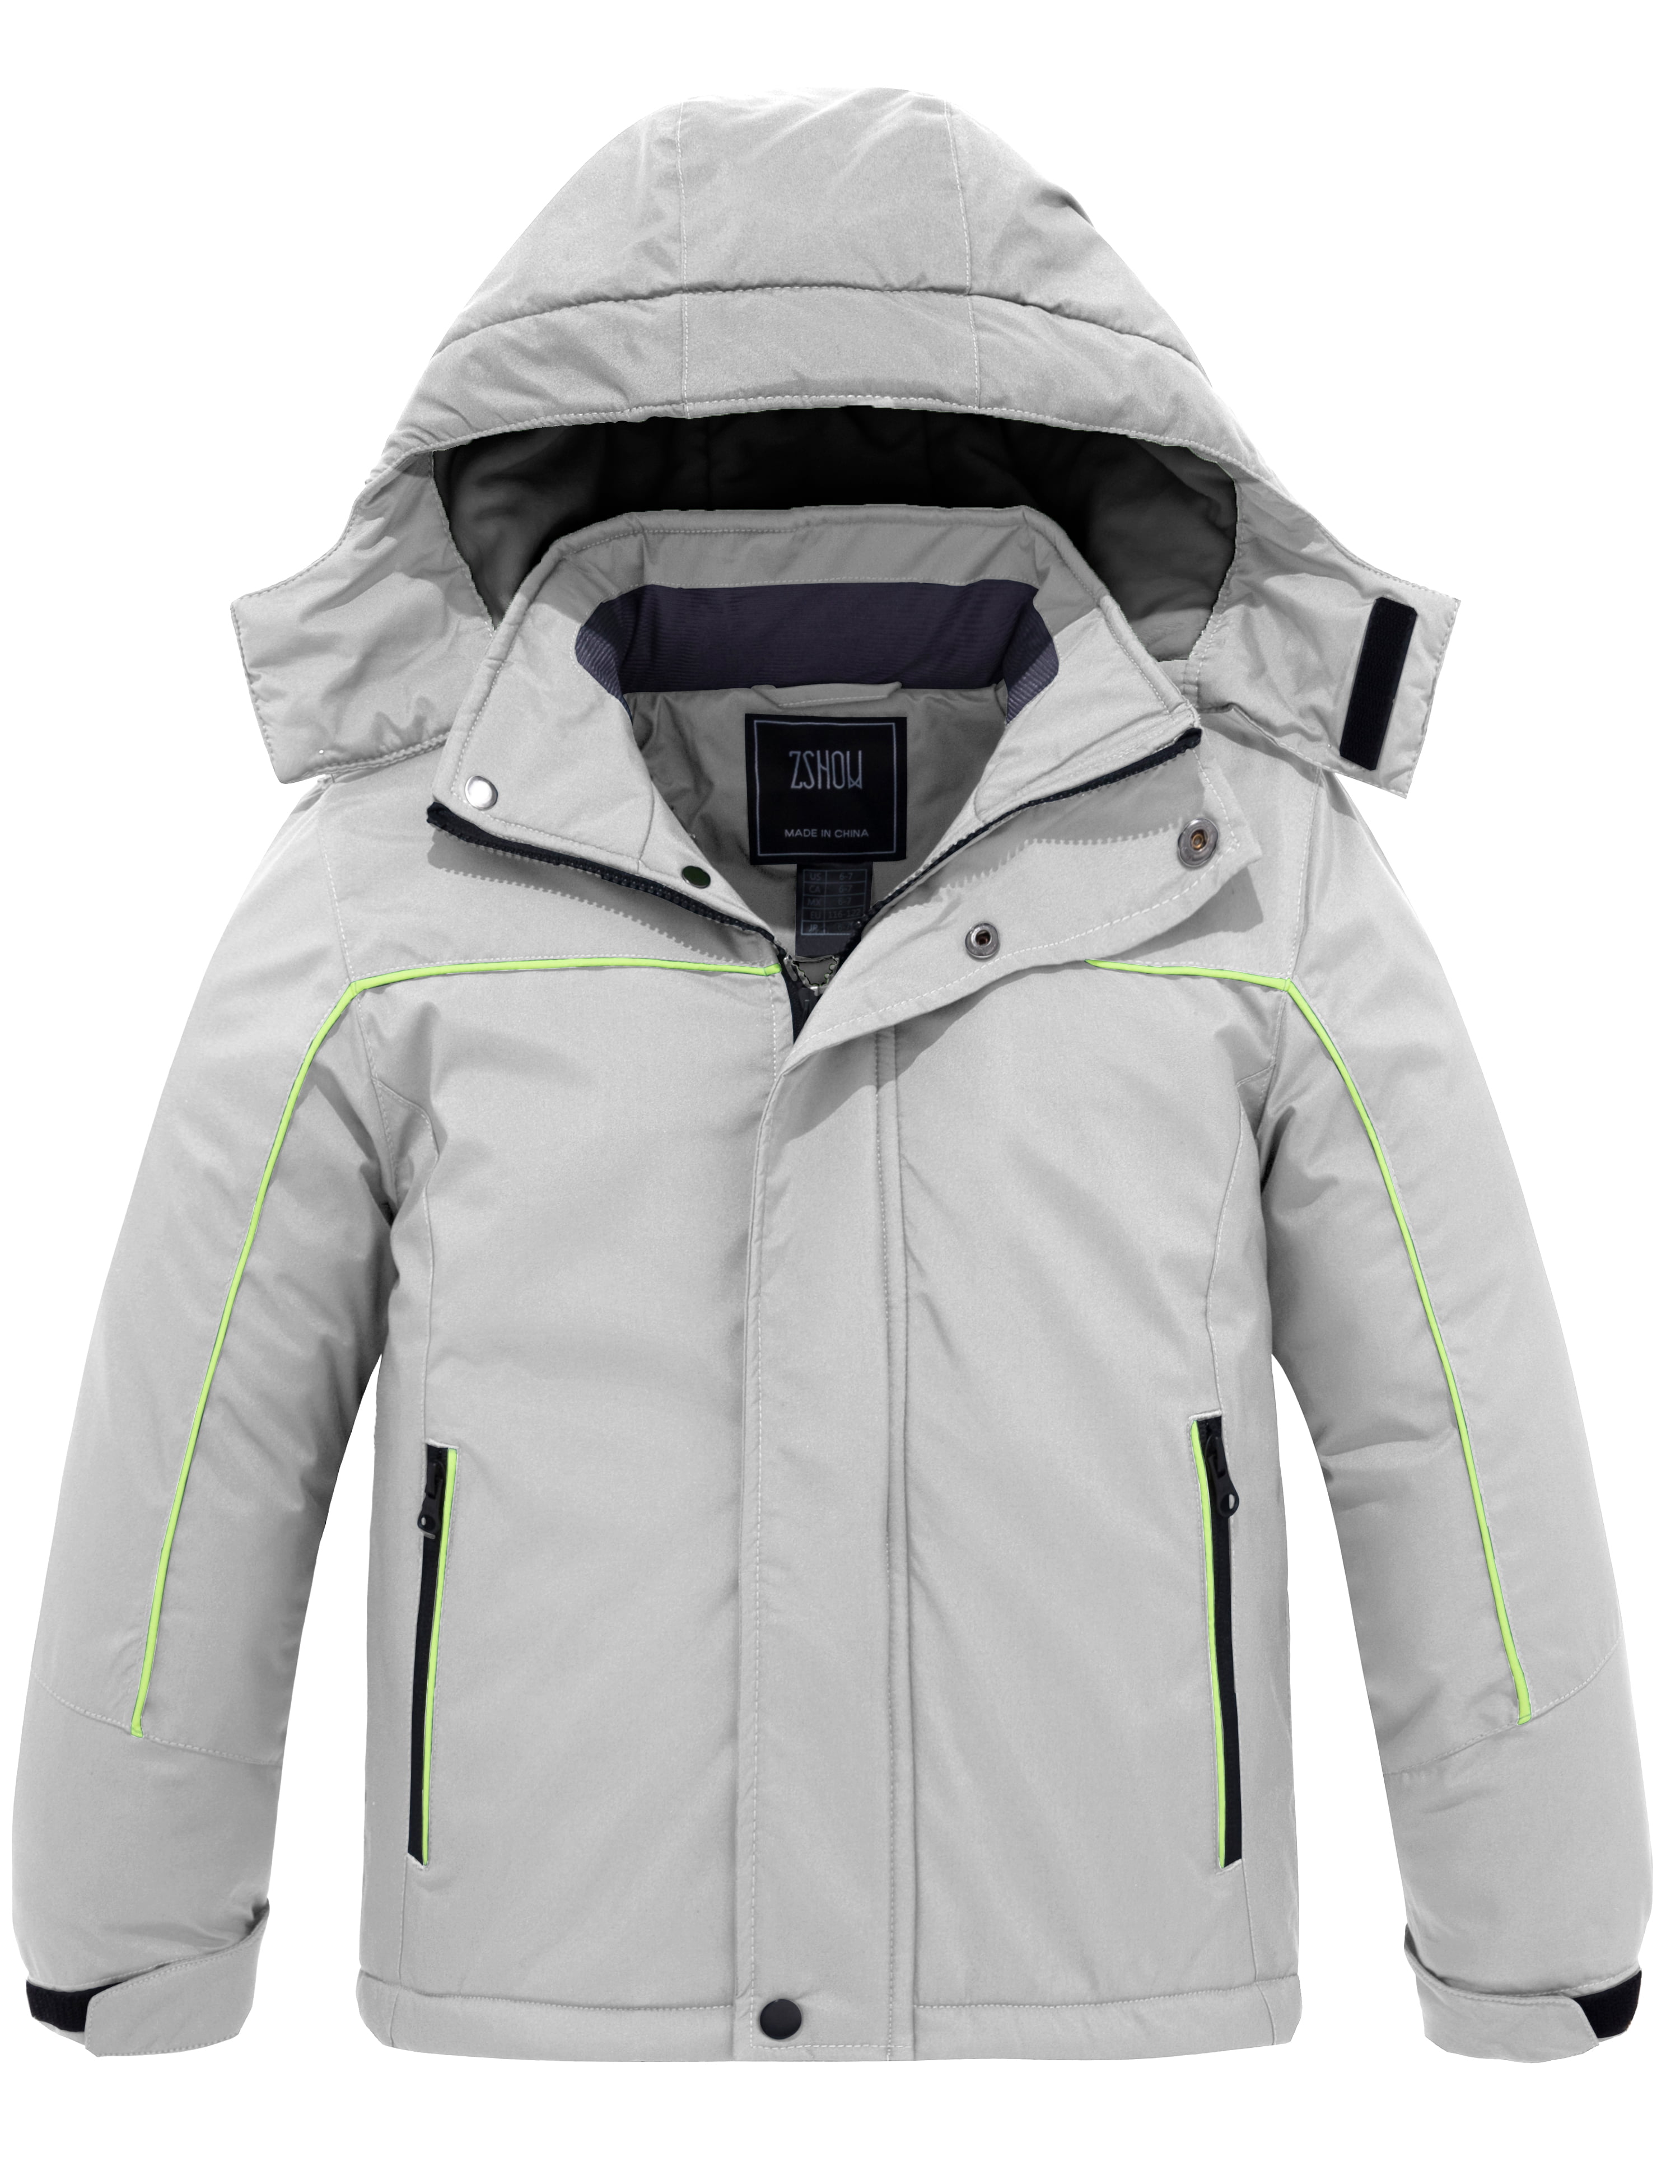 ZSHOW Boys' Waterproof Ski Jacket Warm Winter Coat Thick Hooded Snow Coat 